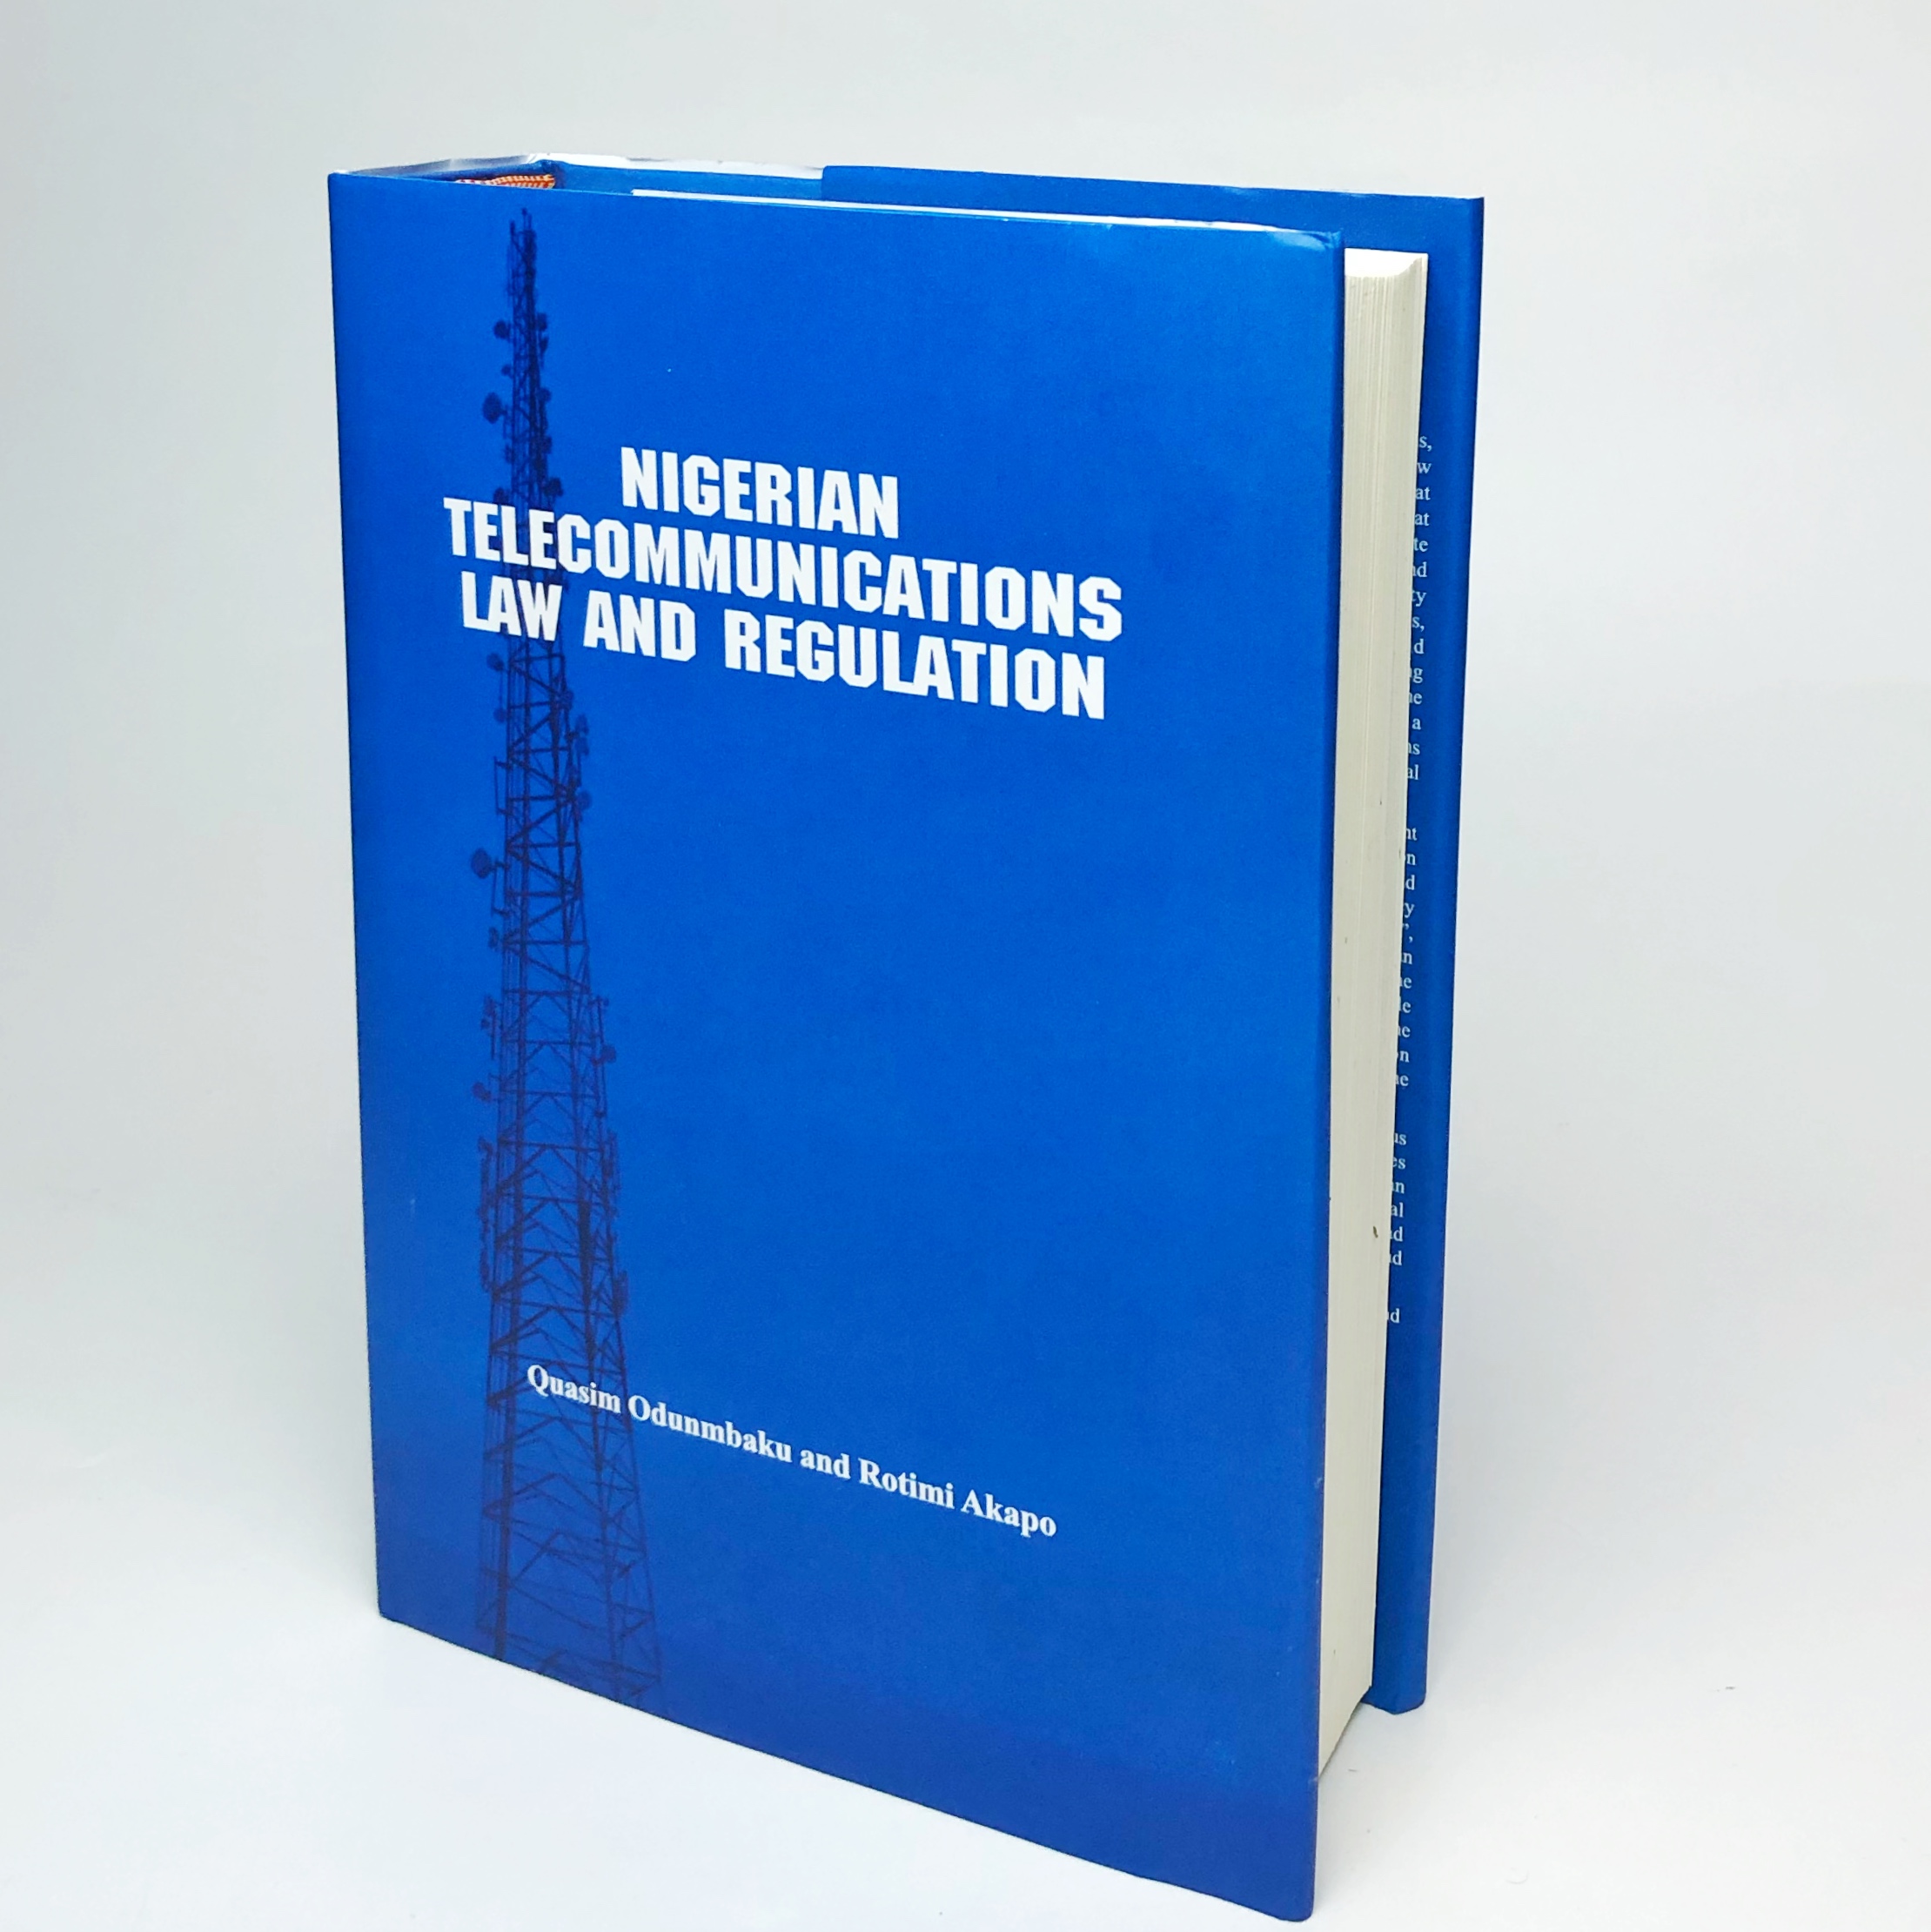 Danbatta, Others Endorse Book on Telecoms Law, Regulations